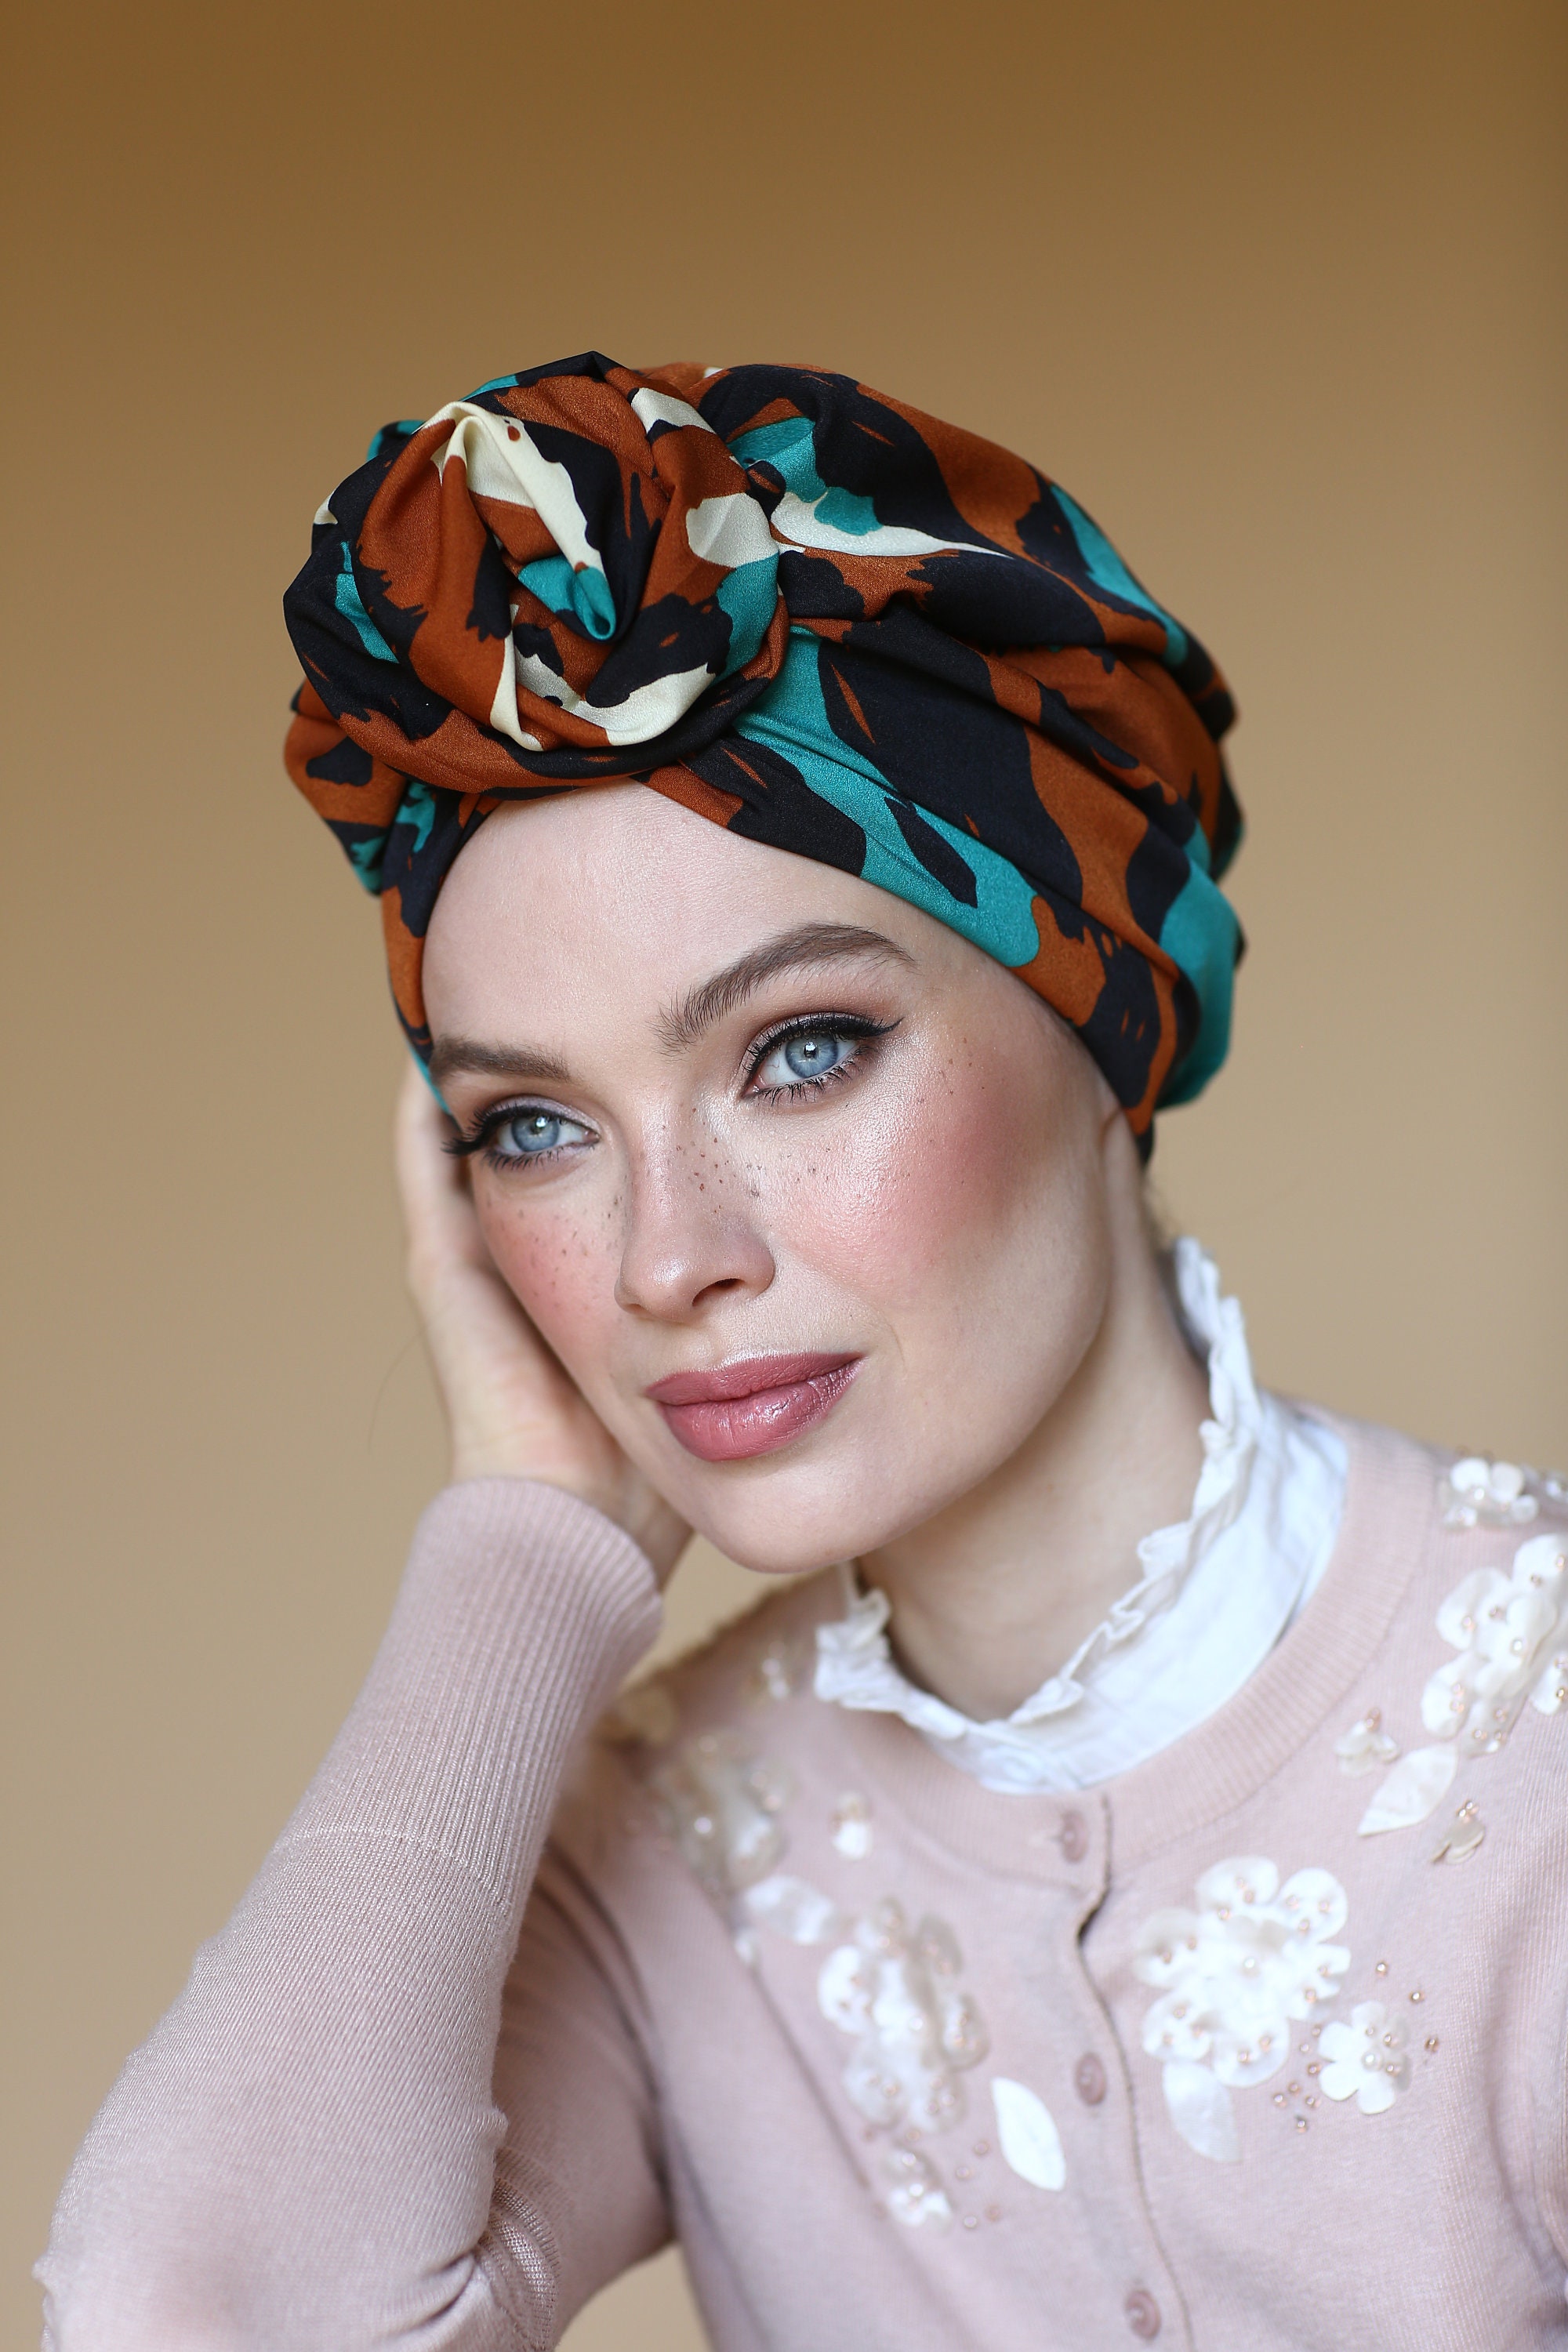 Tichel mitpachat head wraps women's head scarf head | Etsy